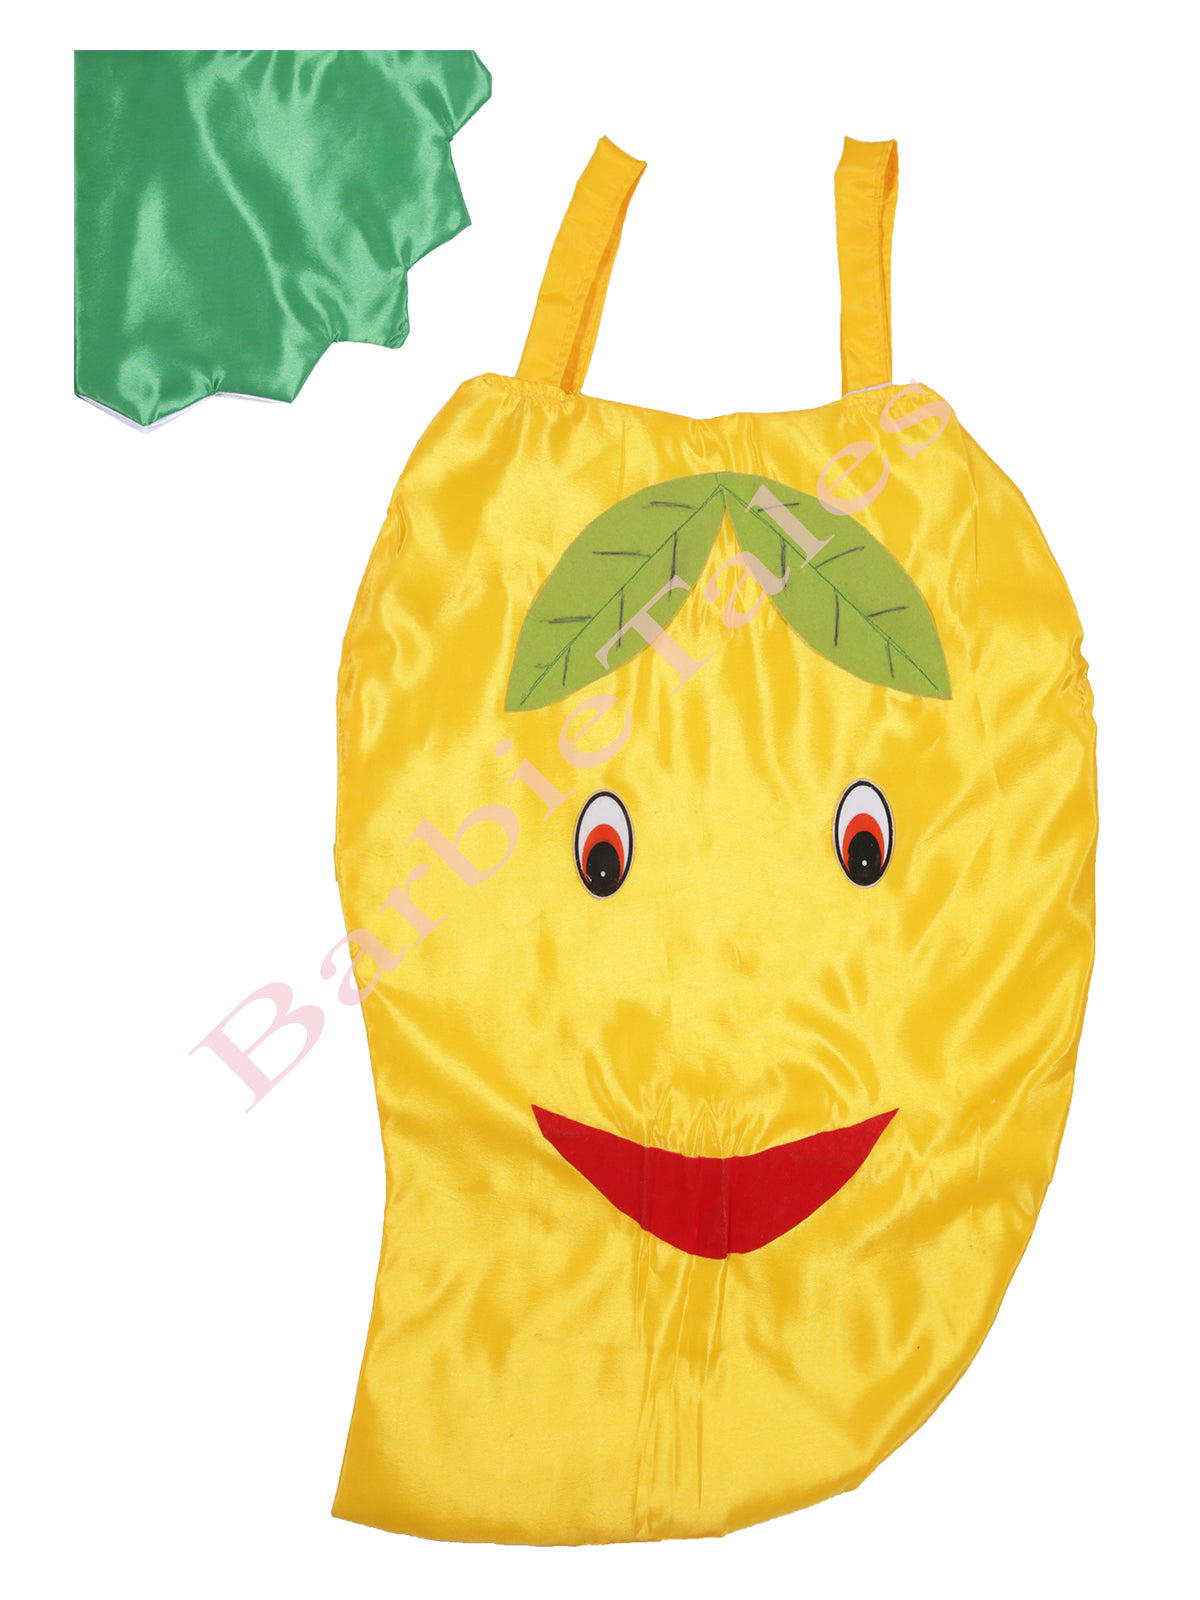 mango fancy dress competition / mango costume for kids 🥭 #mango  #shortvideo #kidsvideo #drawing - YouTube